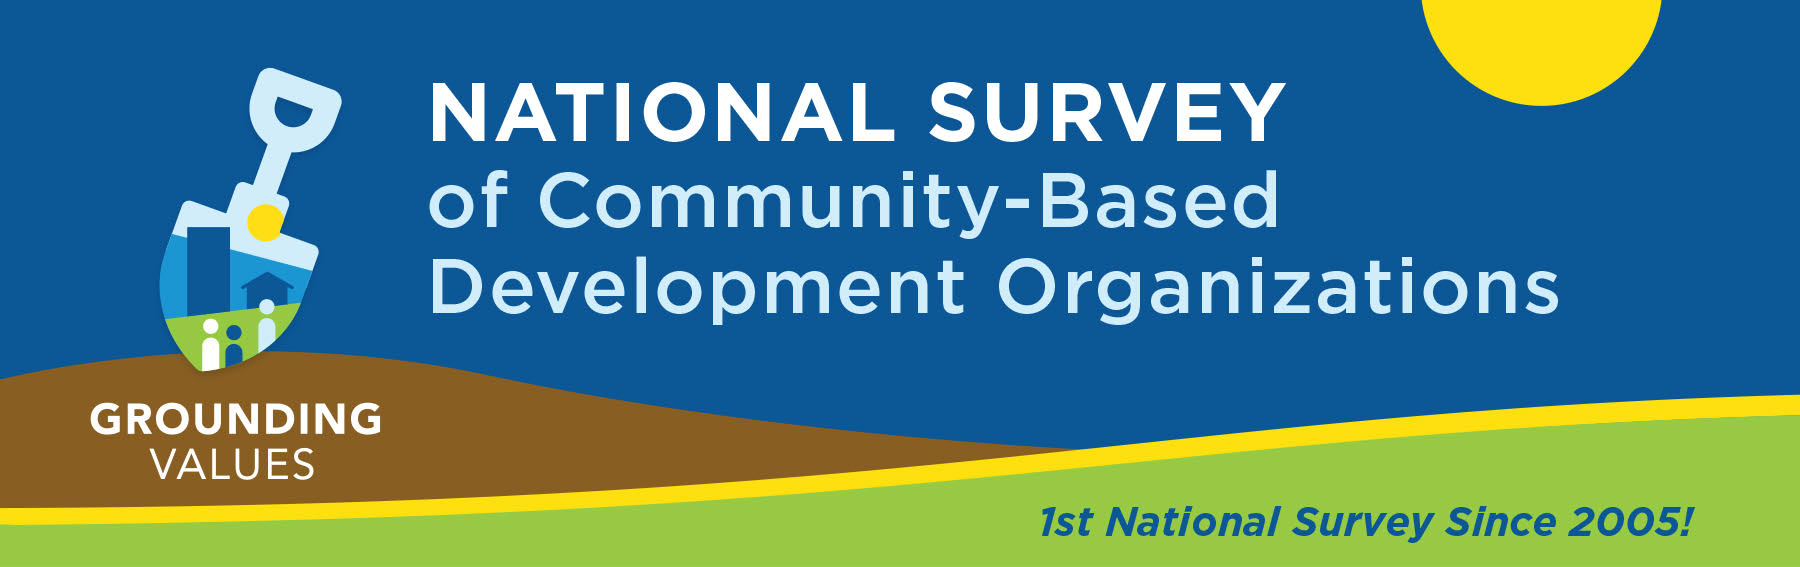 National Survey of Community-Based Development Organizations